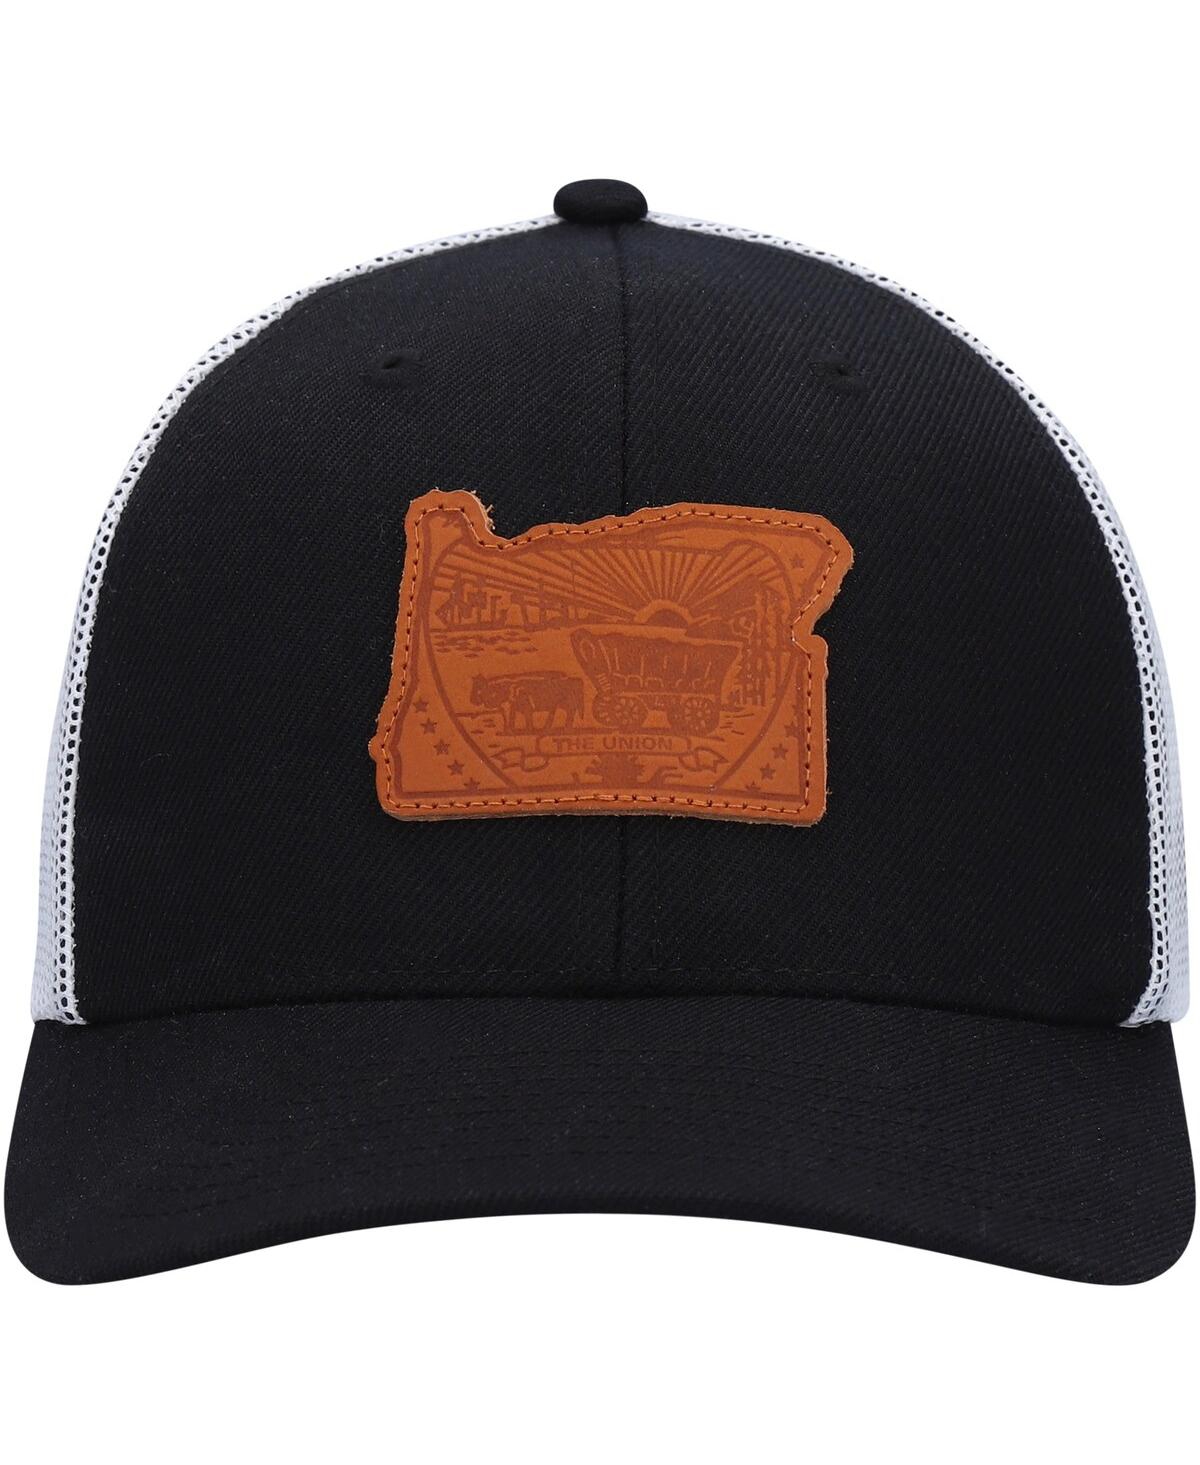 Shop Local Crowns Men's  Black Oregon Leather State Applique Trucker Snapback Hat